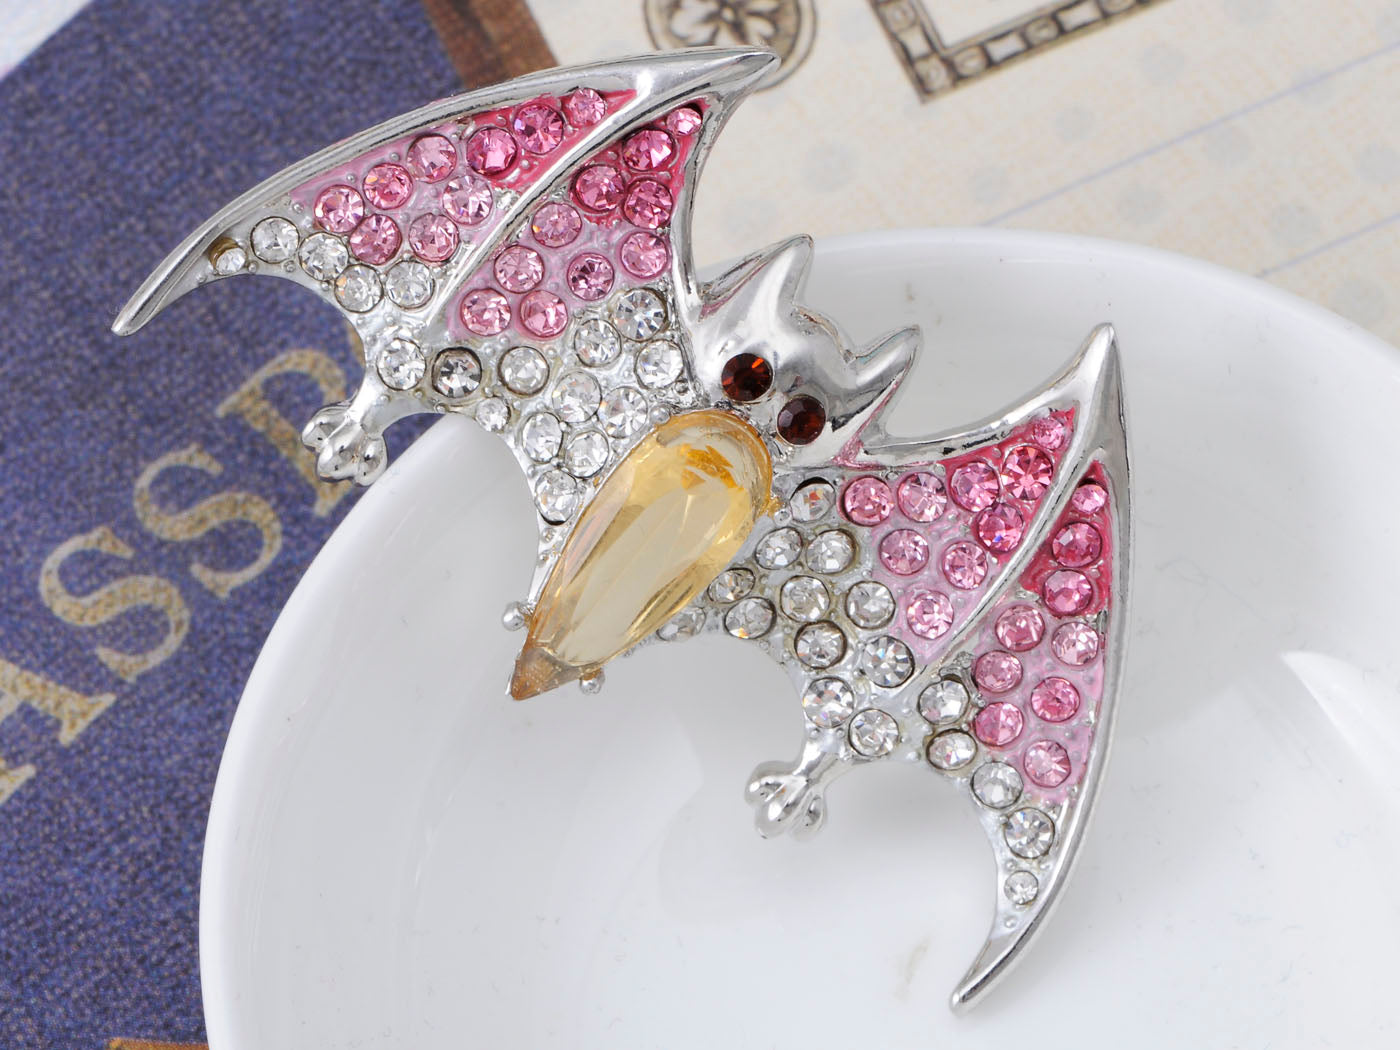 Silver Halloween Ombre Pink Vampire Bat Wing Animal Brooch Pin